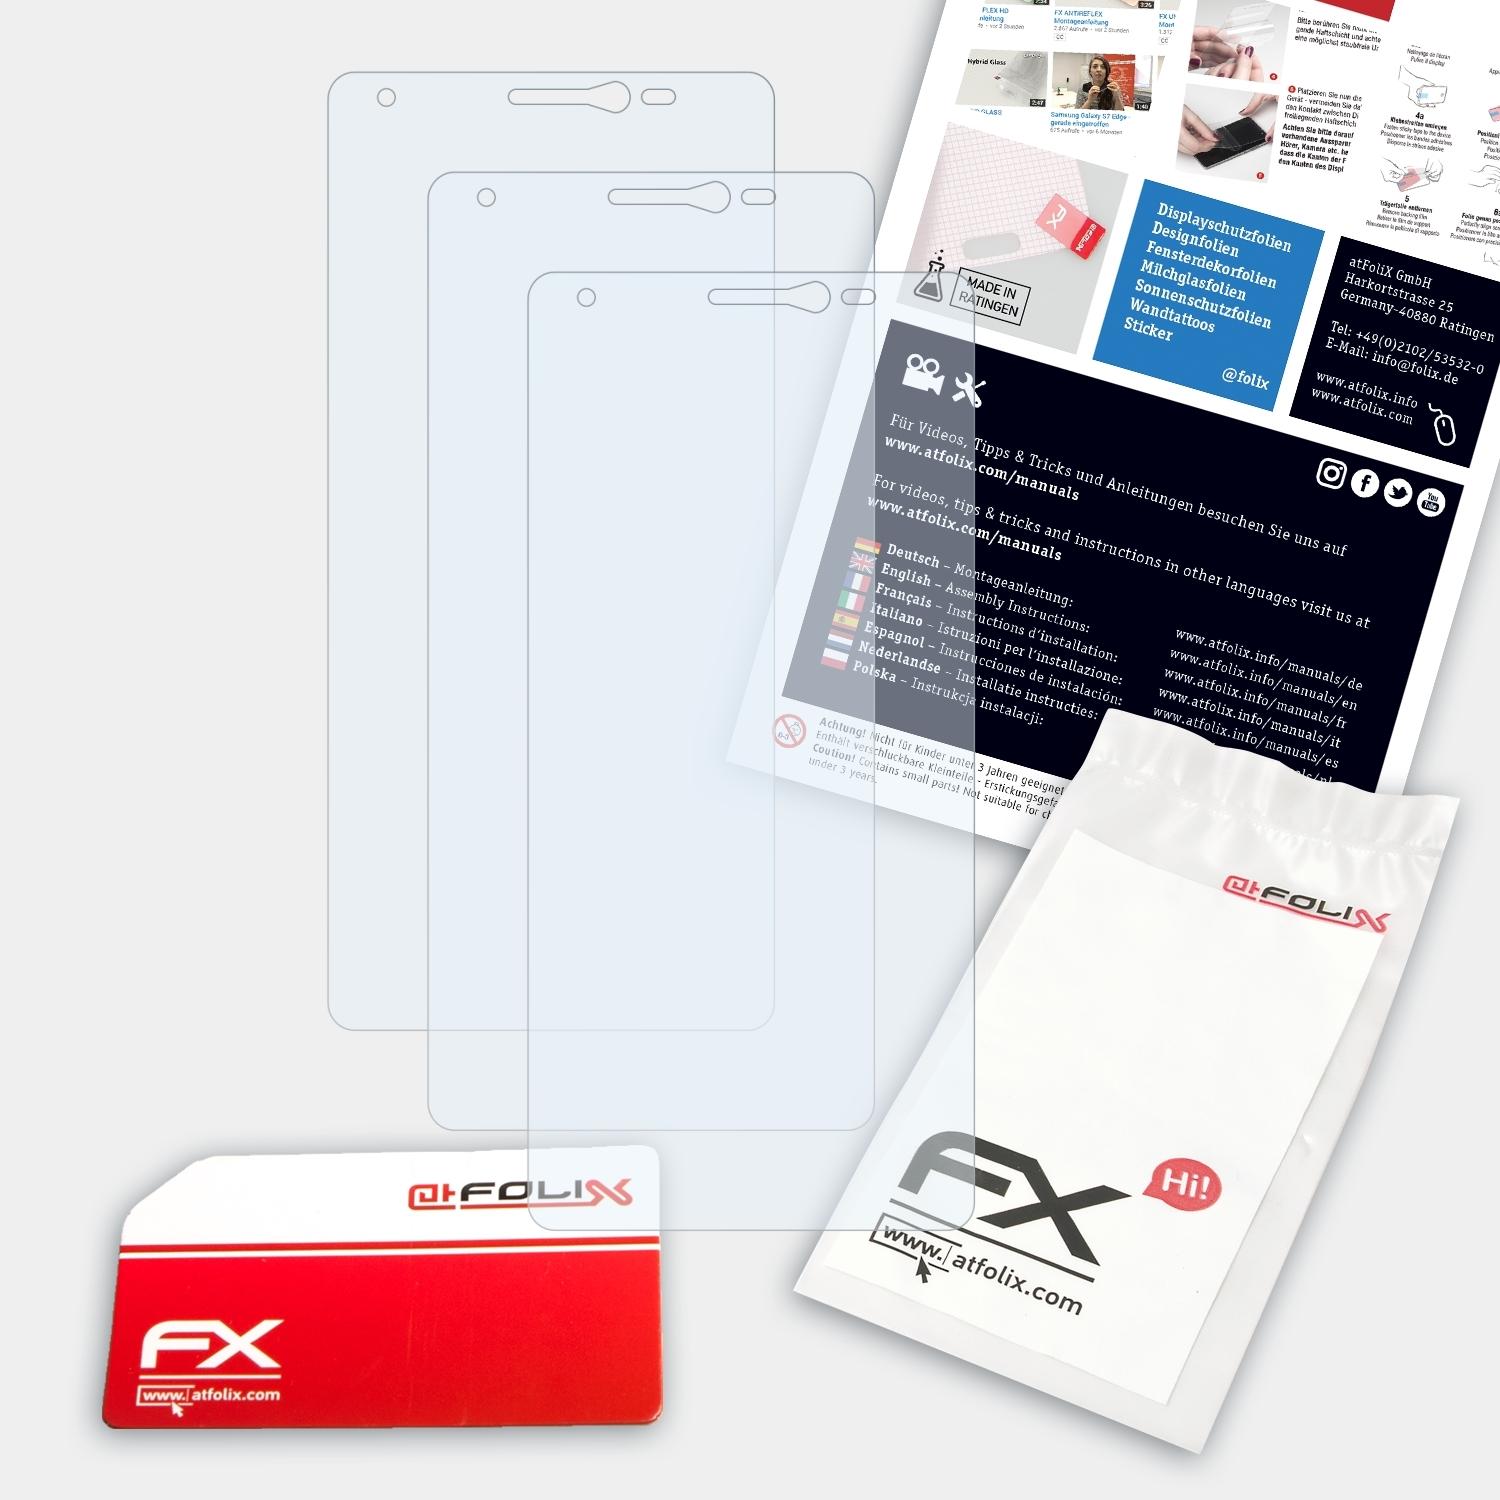 ATFOLIX 3x Nuu Displayschutz(für A4L) FX-Clear Mobile